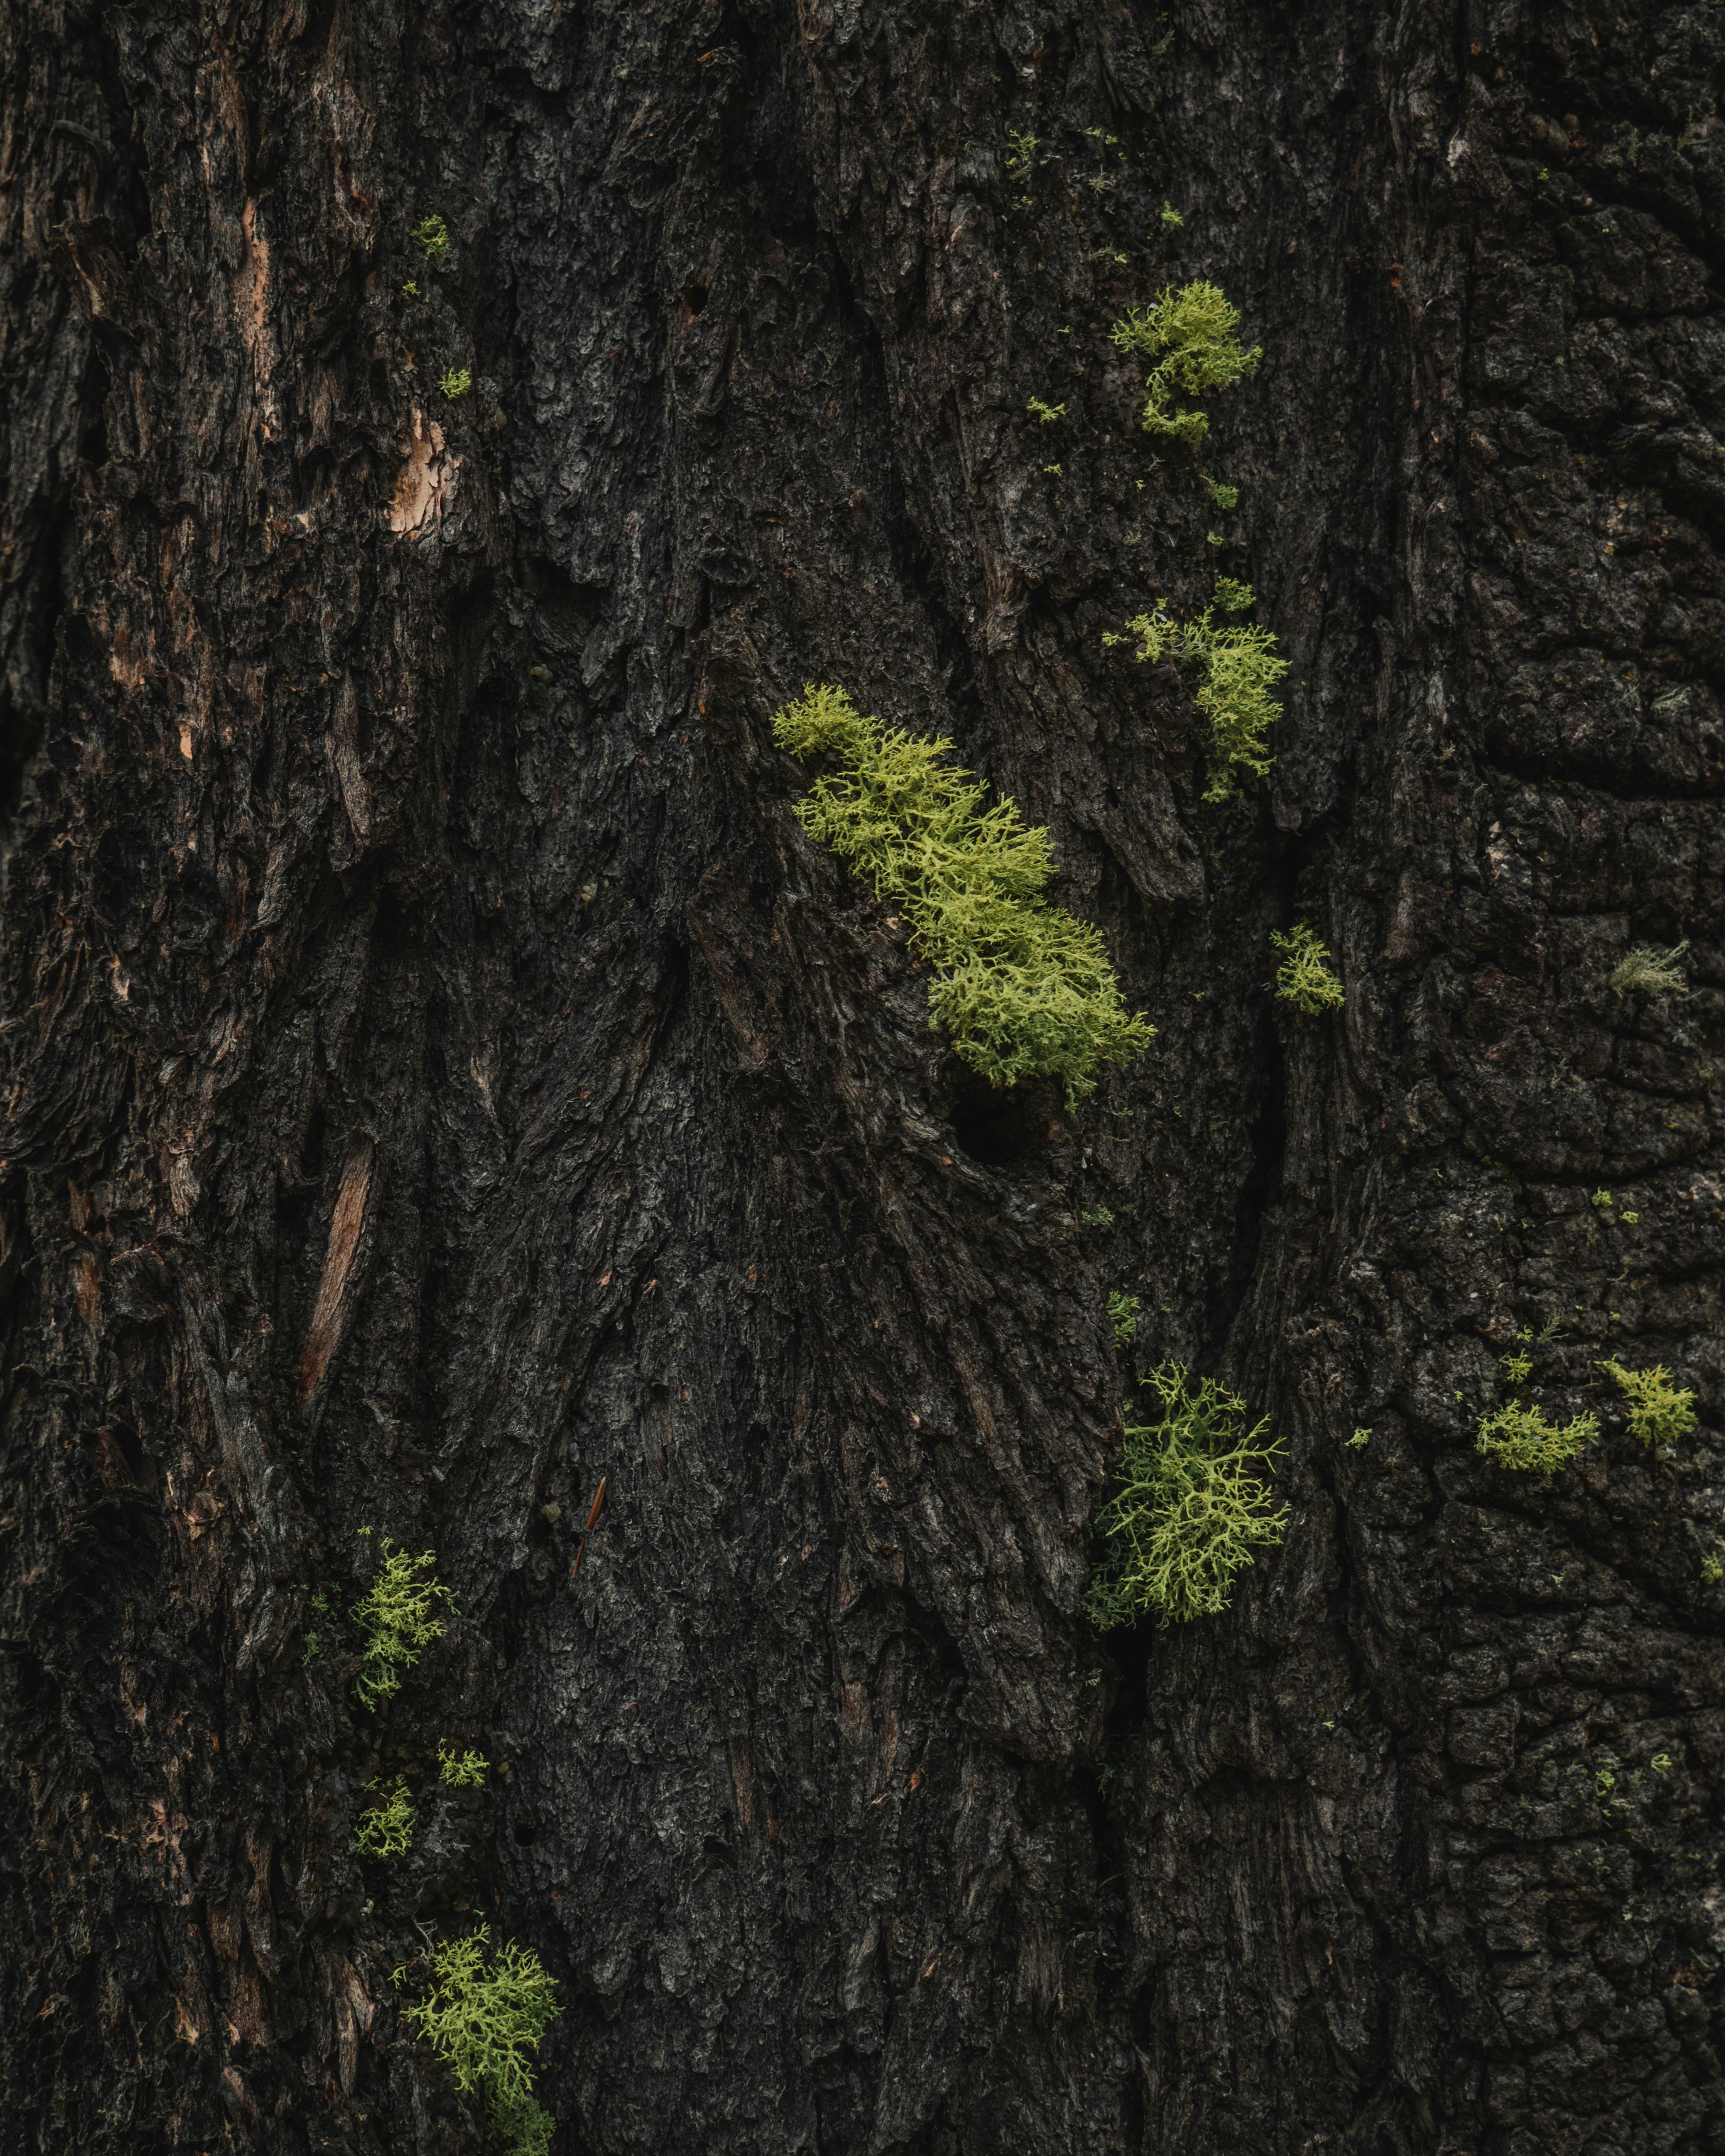 green moss growing on tree bark